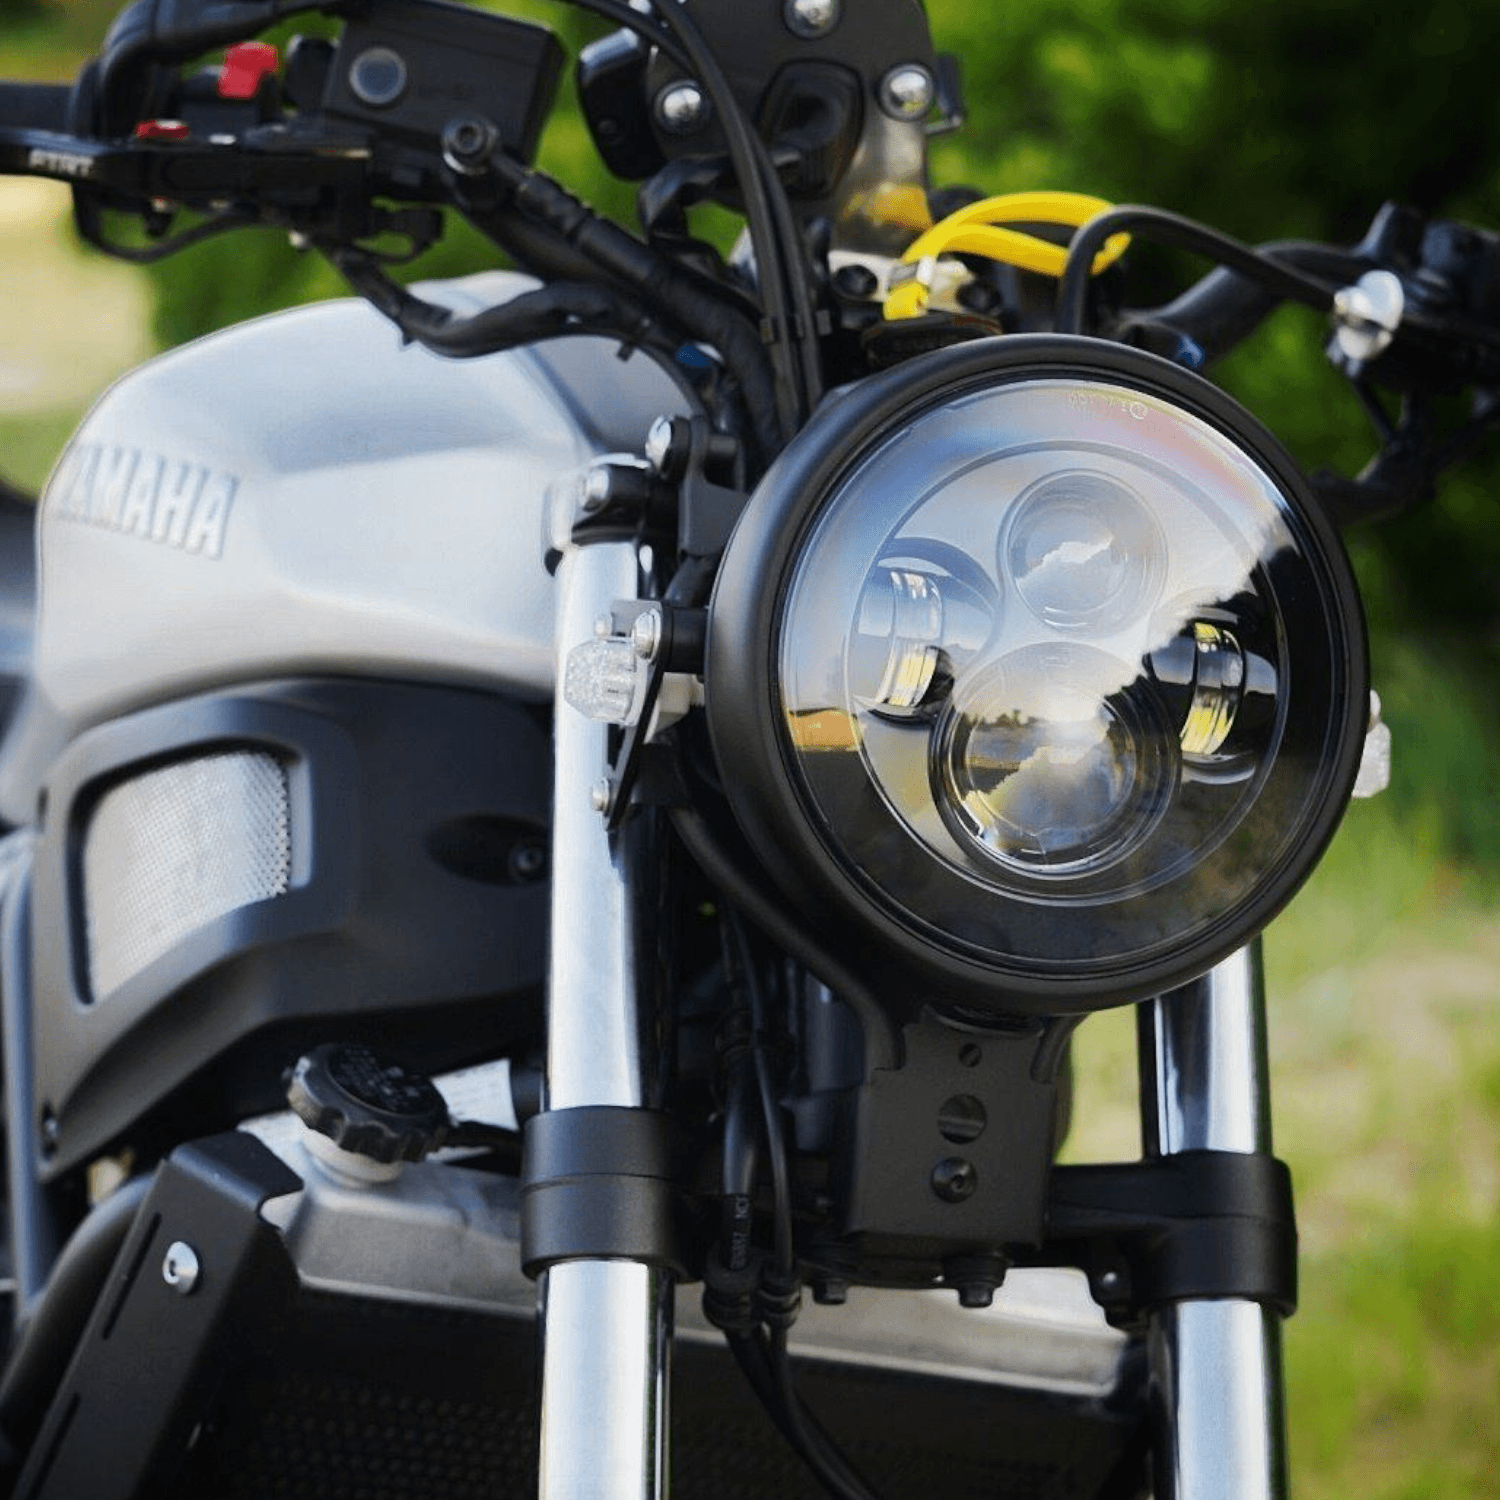 Eagle Lights 7" LED Headlight for Harley Davidson and Indian Motorcycles - Generation I / Black Kit